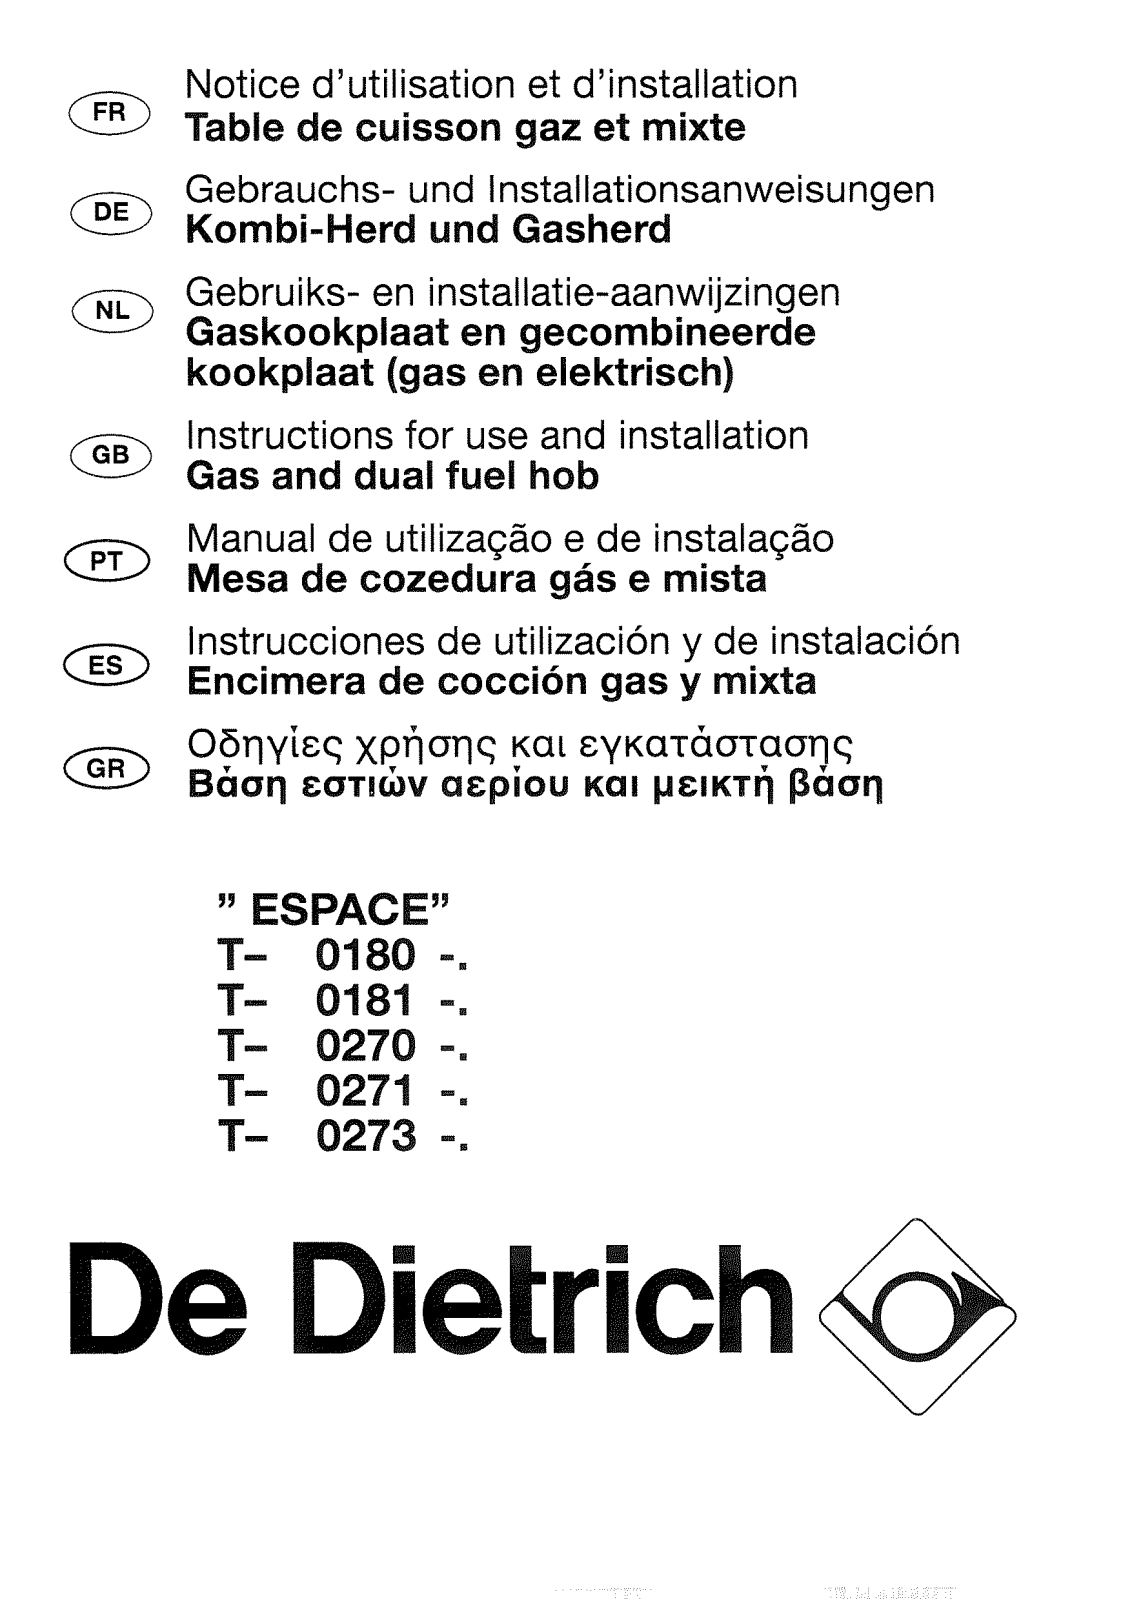 De dietrich TM0270E1, TM0273E1N, TM0270E1N, TM0273E1, TM0180E1N User Manual